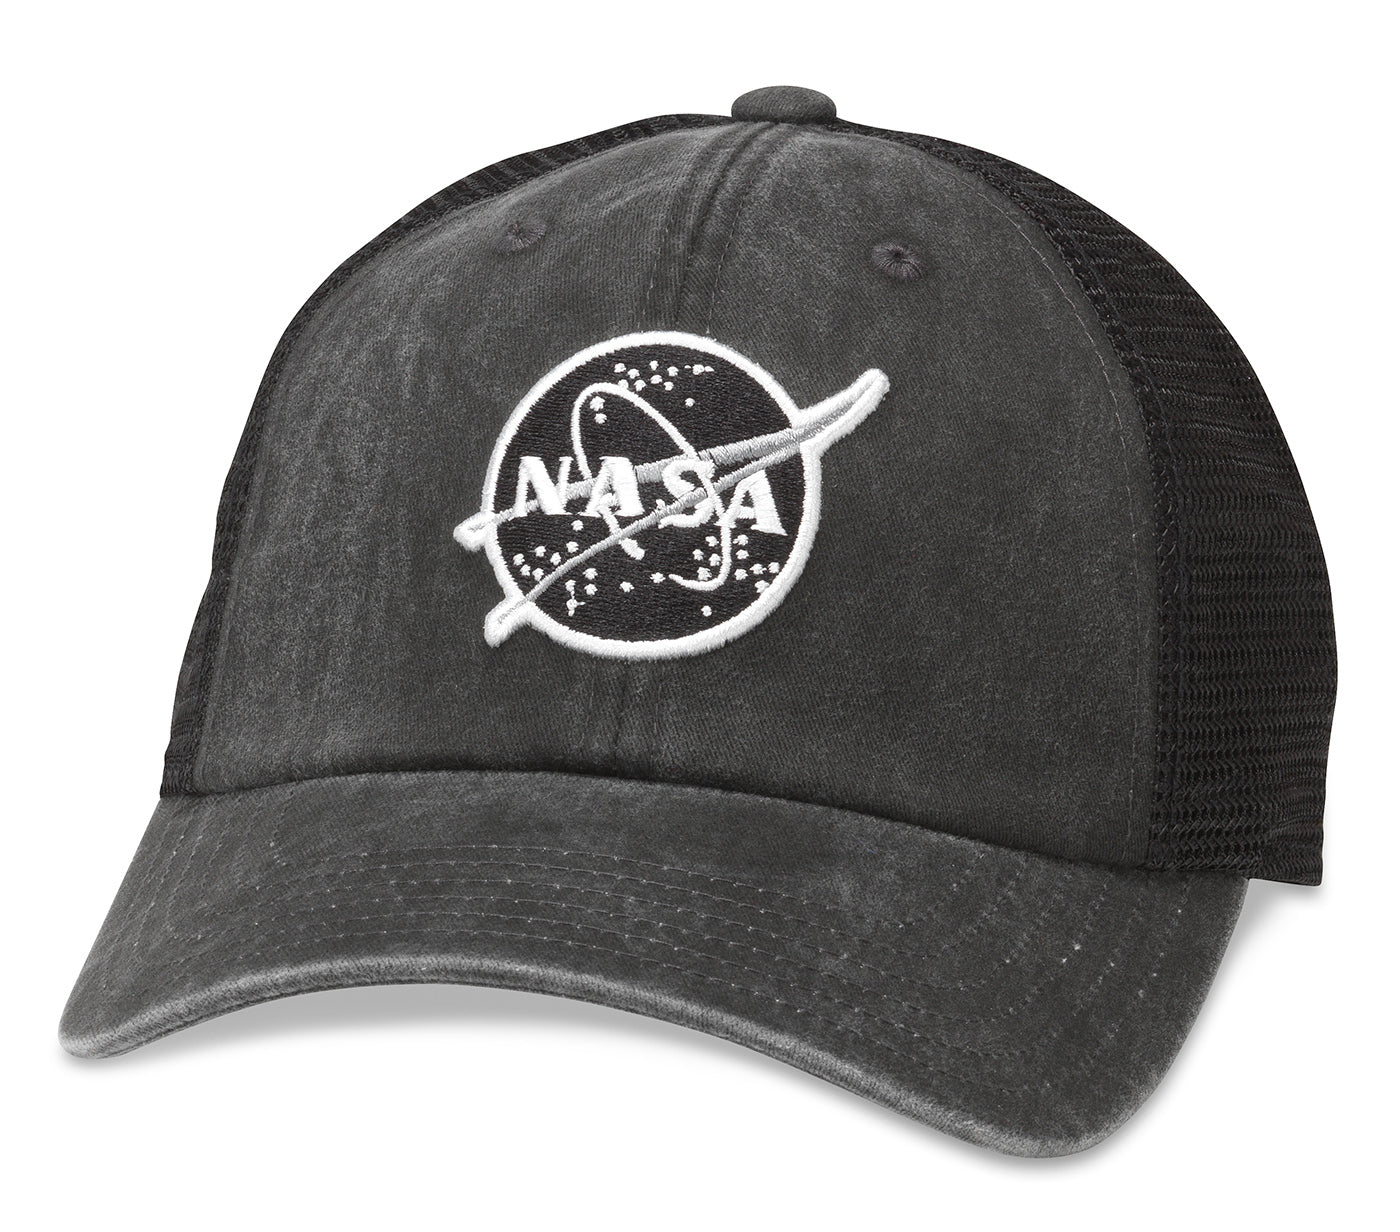 NASA Raglan Bones Hat